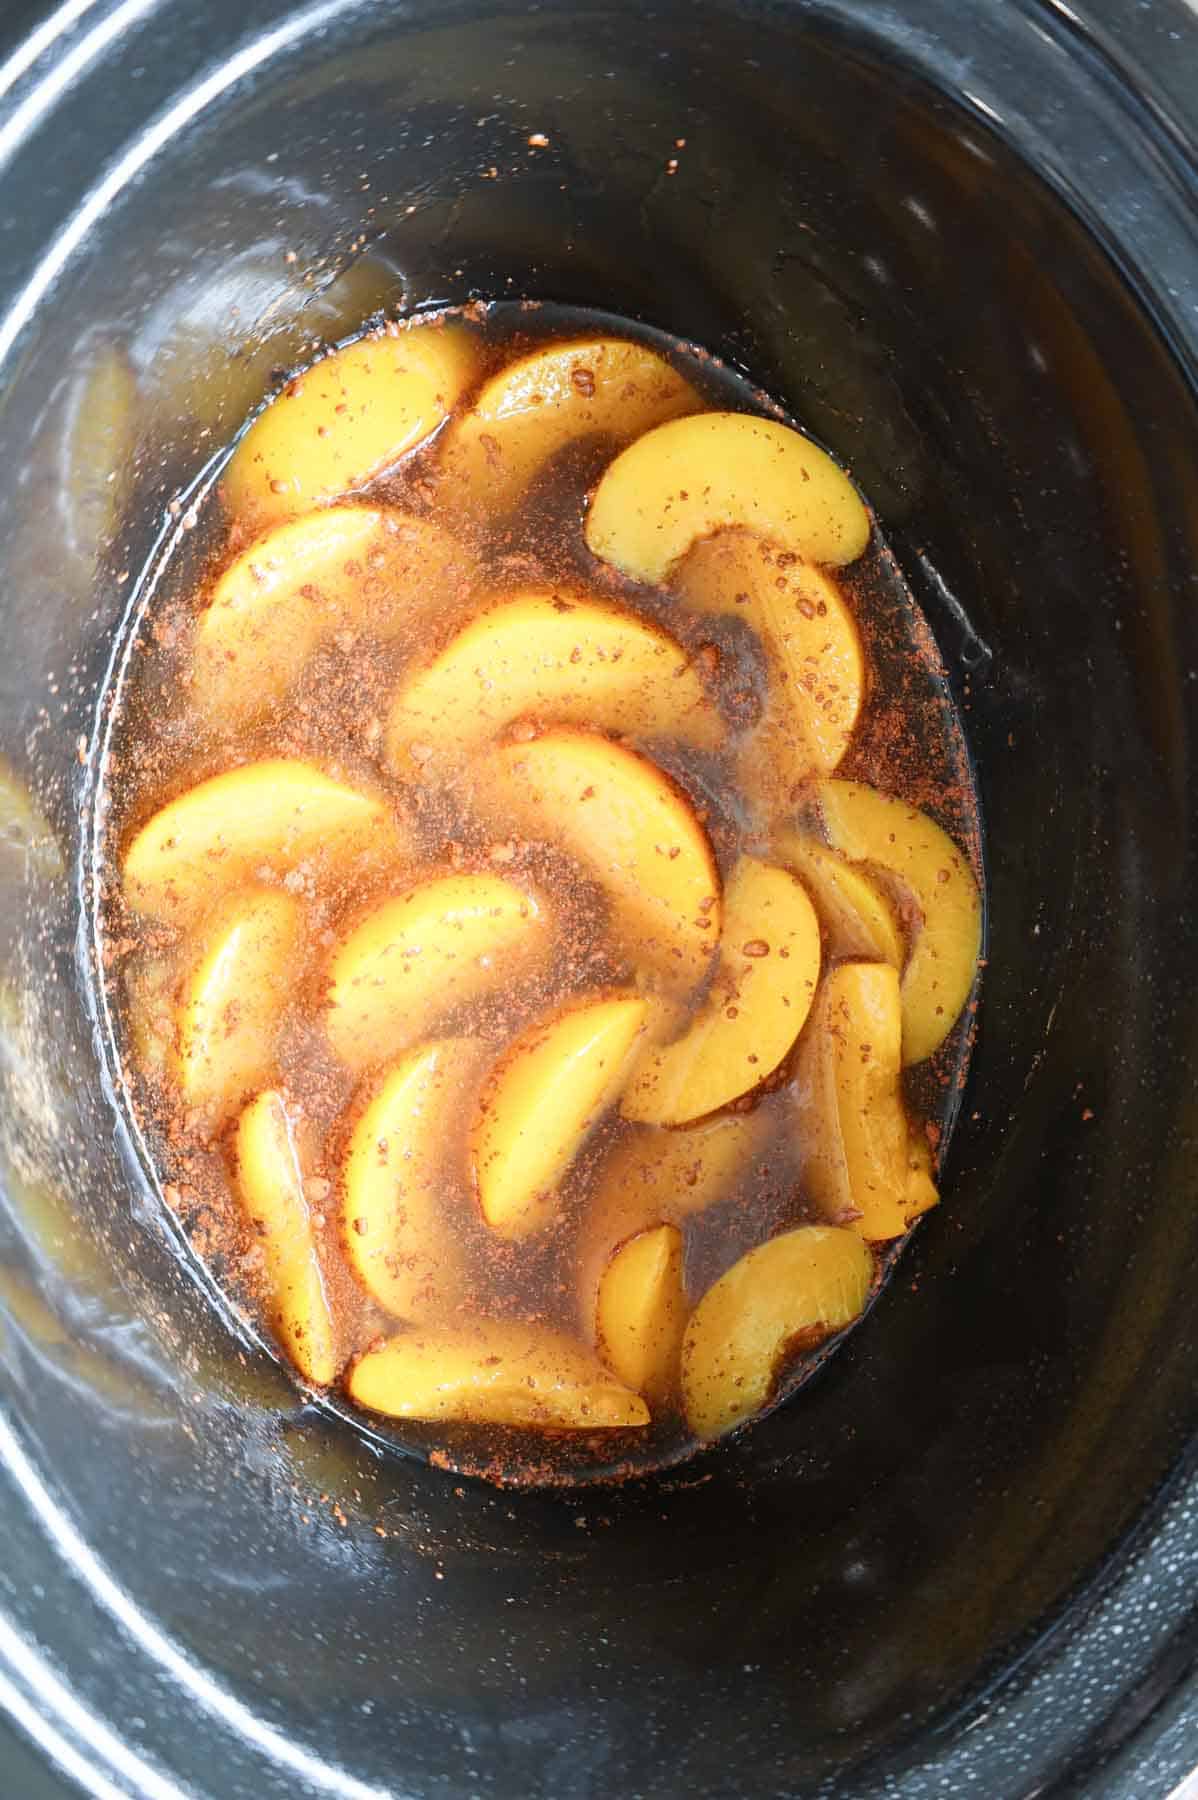 sliced peaches, brown sugar and cinnamon mixture in a crock pot